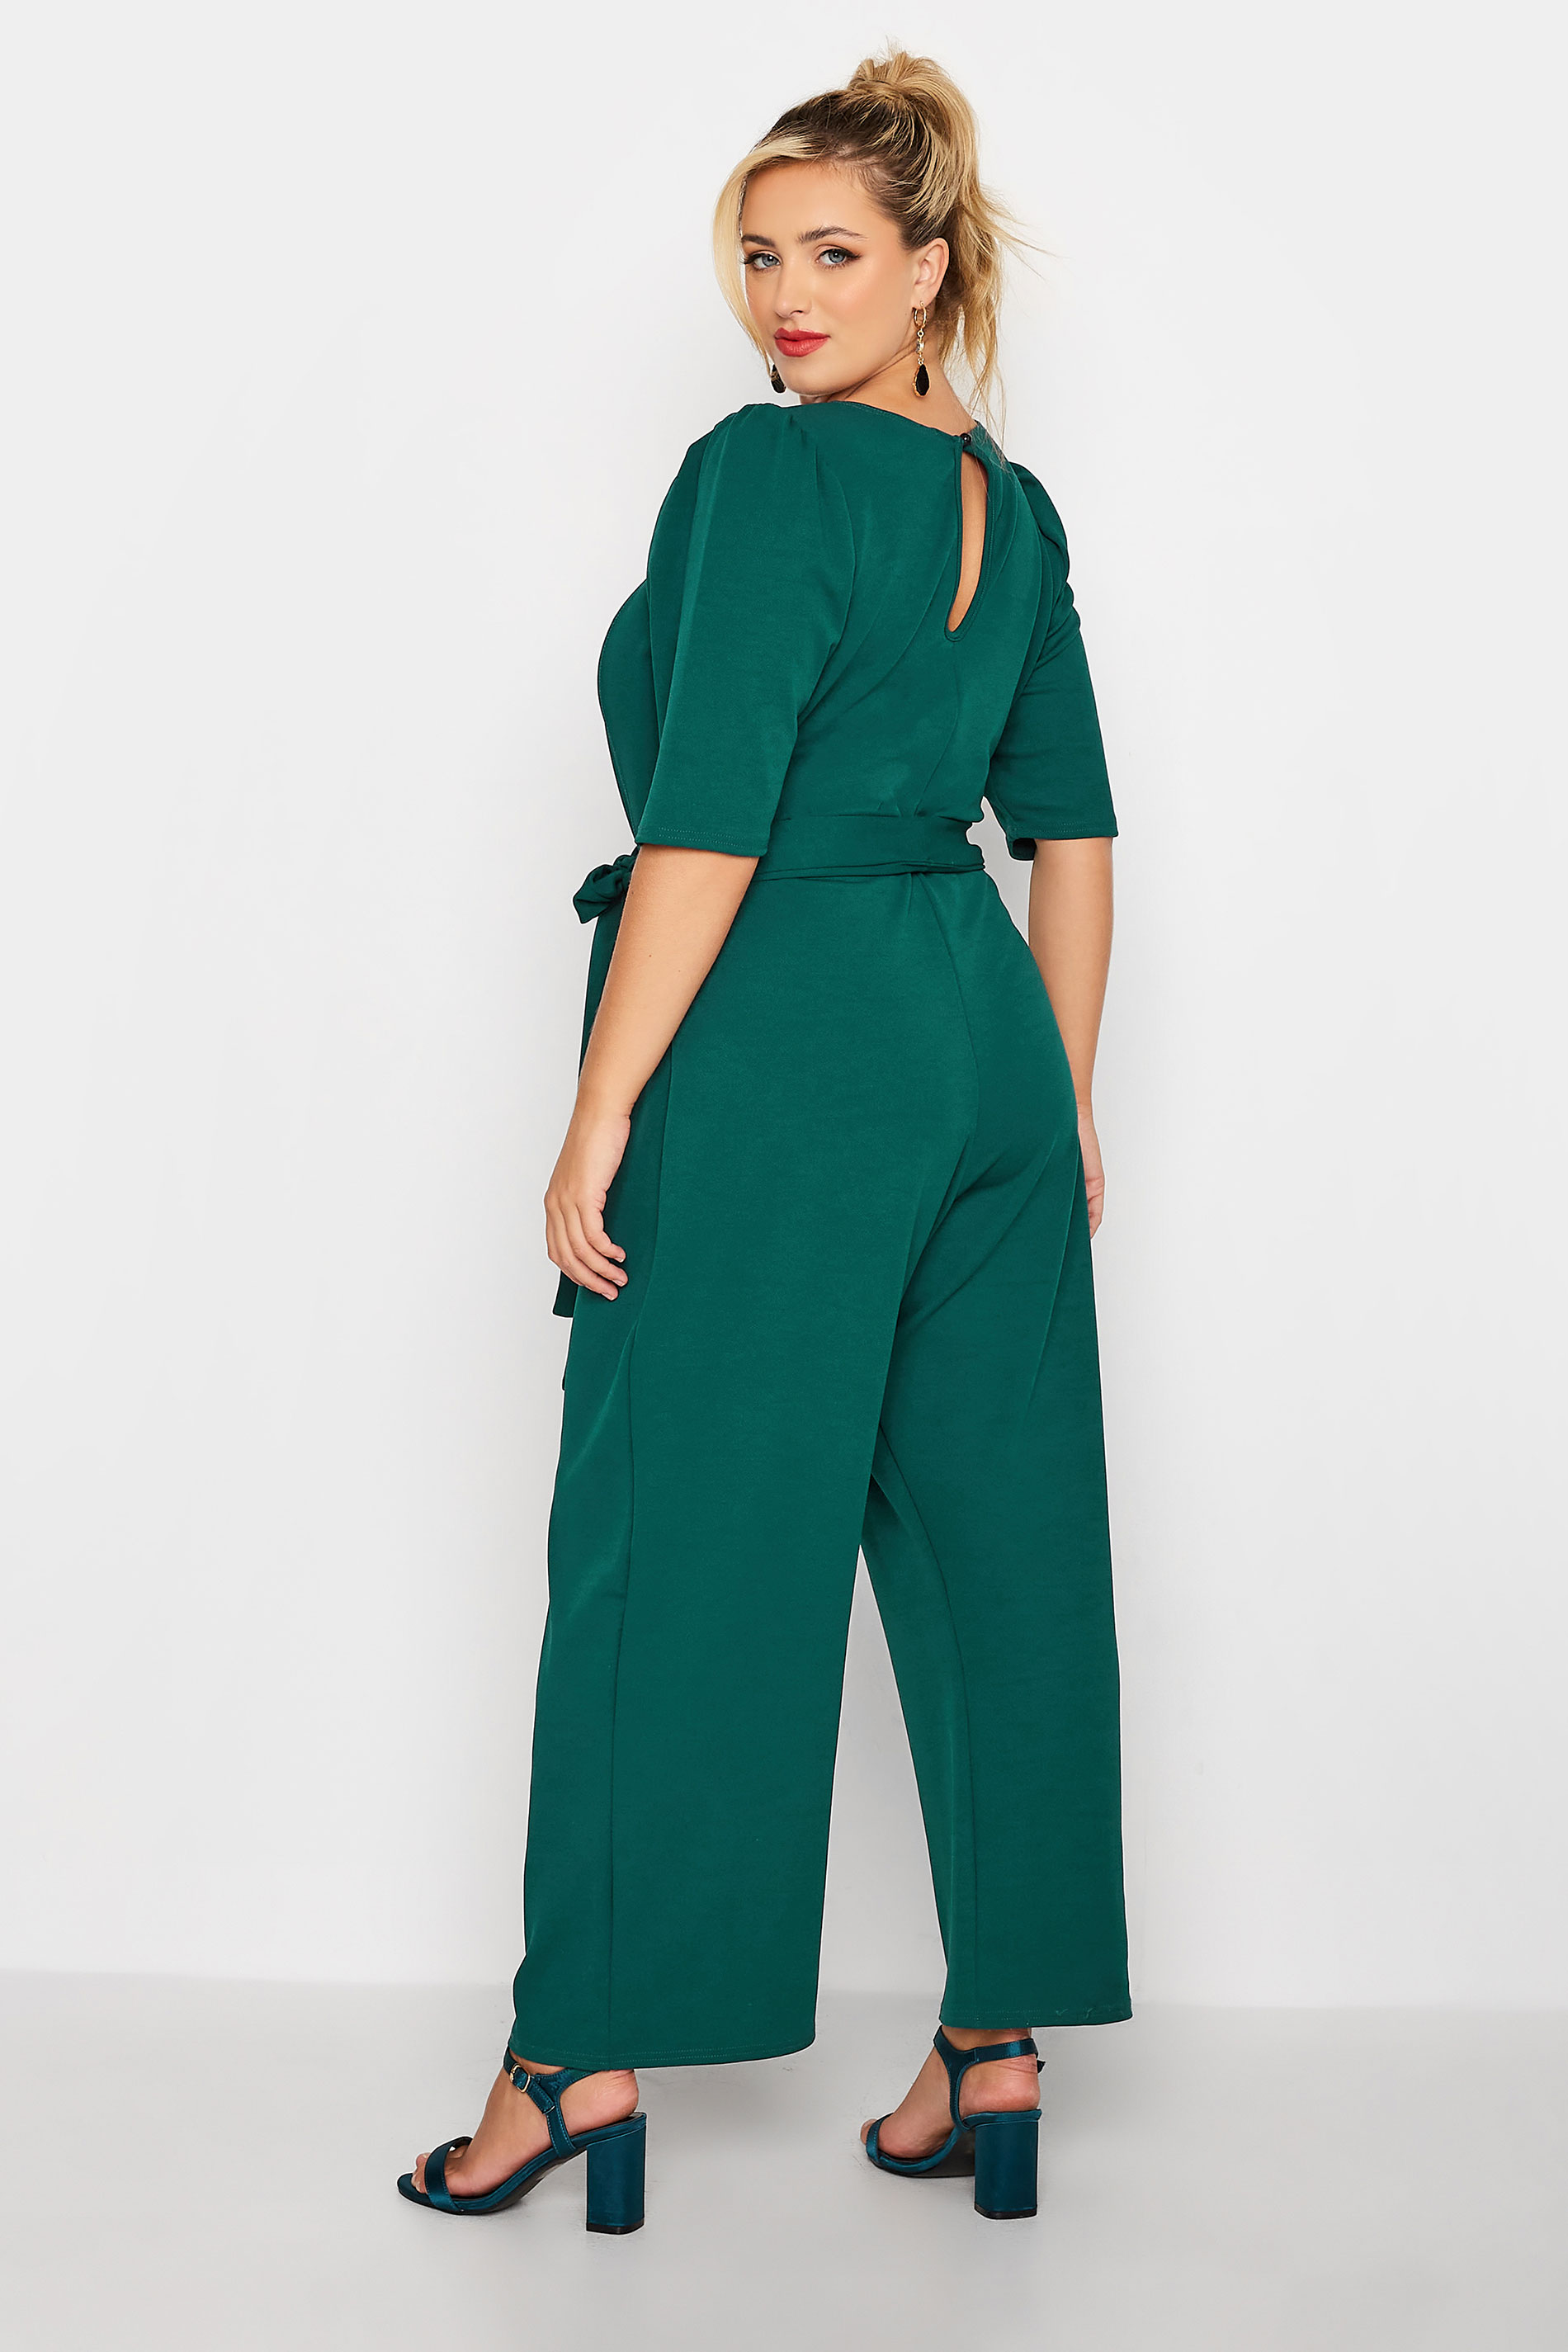 YOURS LONDON Plus Size Green Notch Neck Tie Waist Jumpsuit | Yours Clothing 3